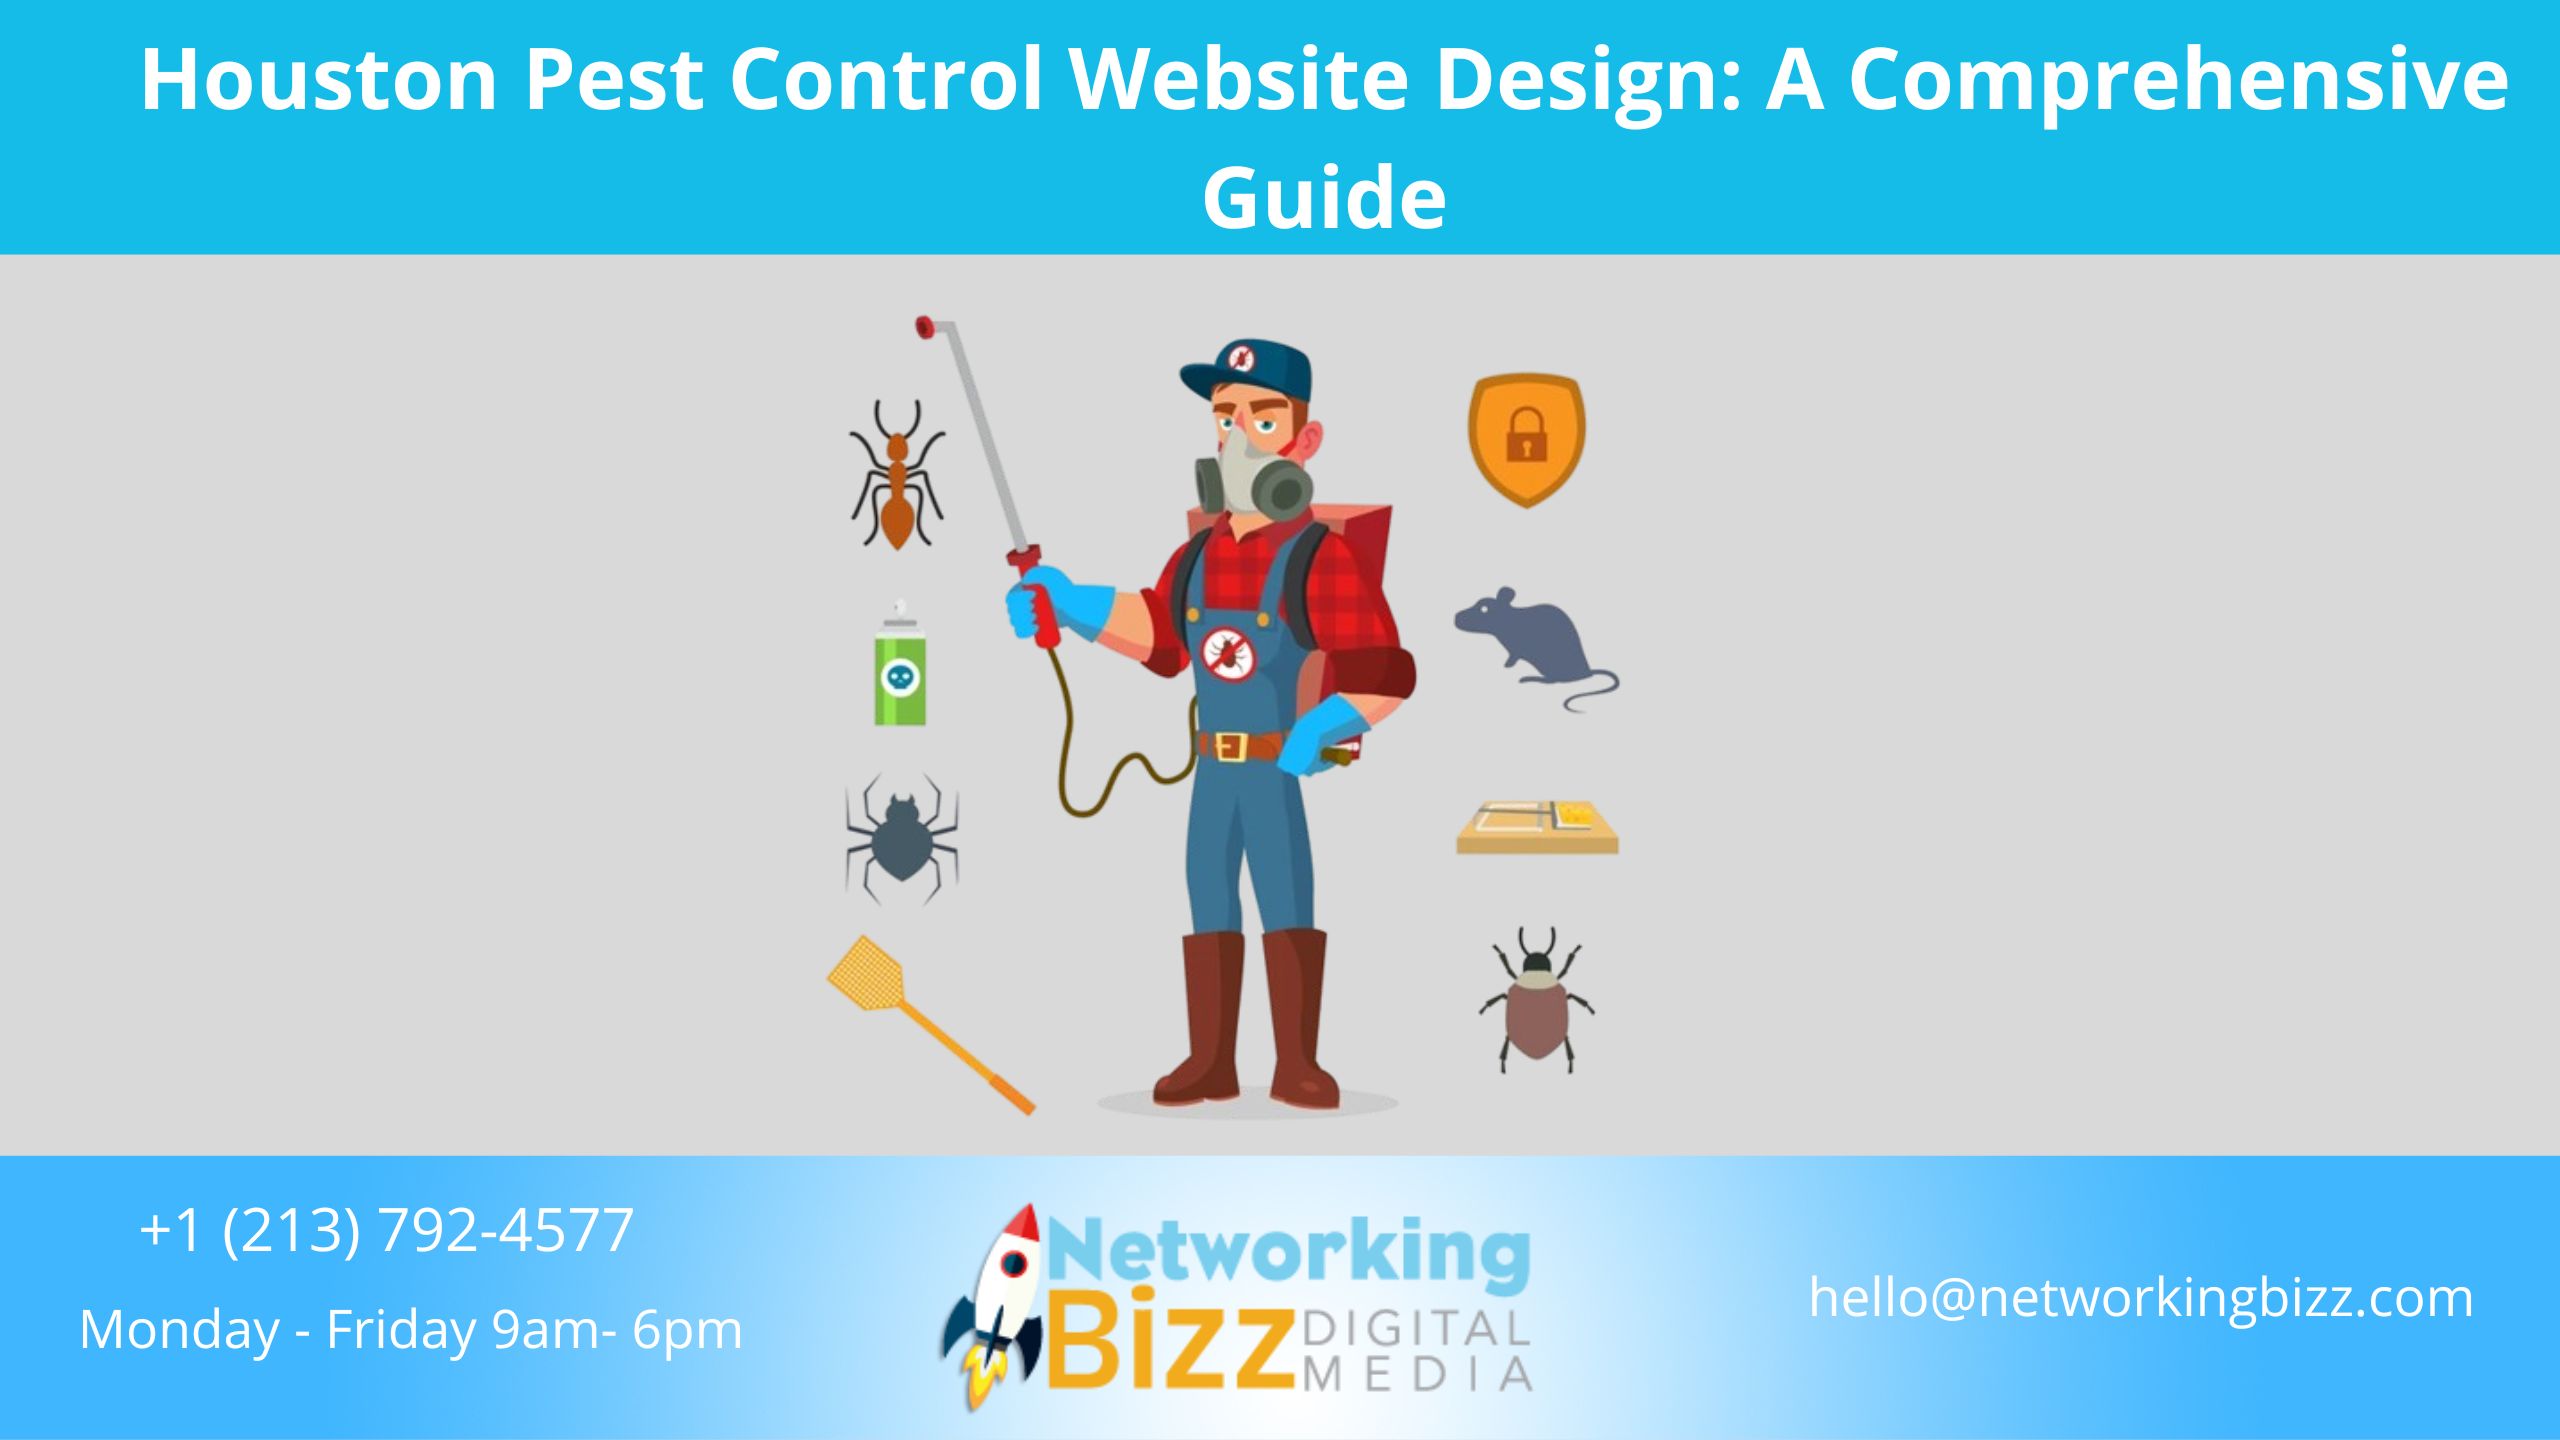 Houston Pest Control Website Design: A Comprehensive Guide